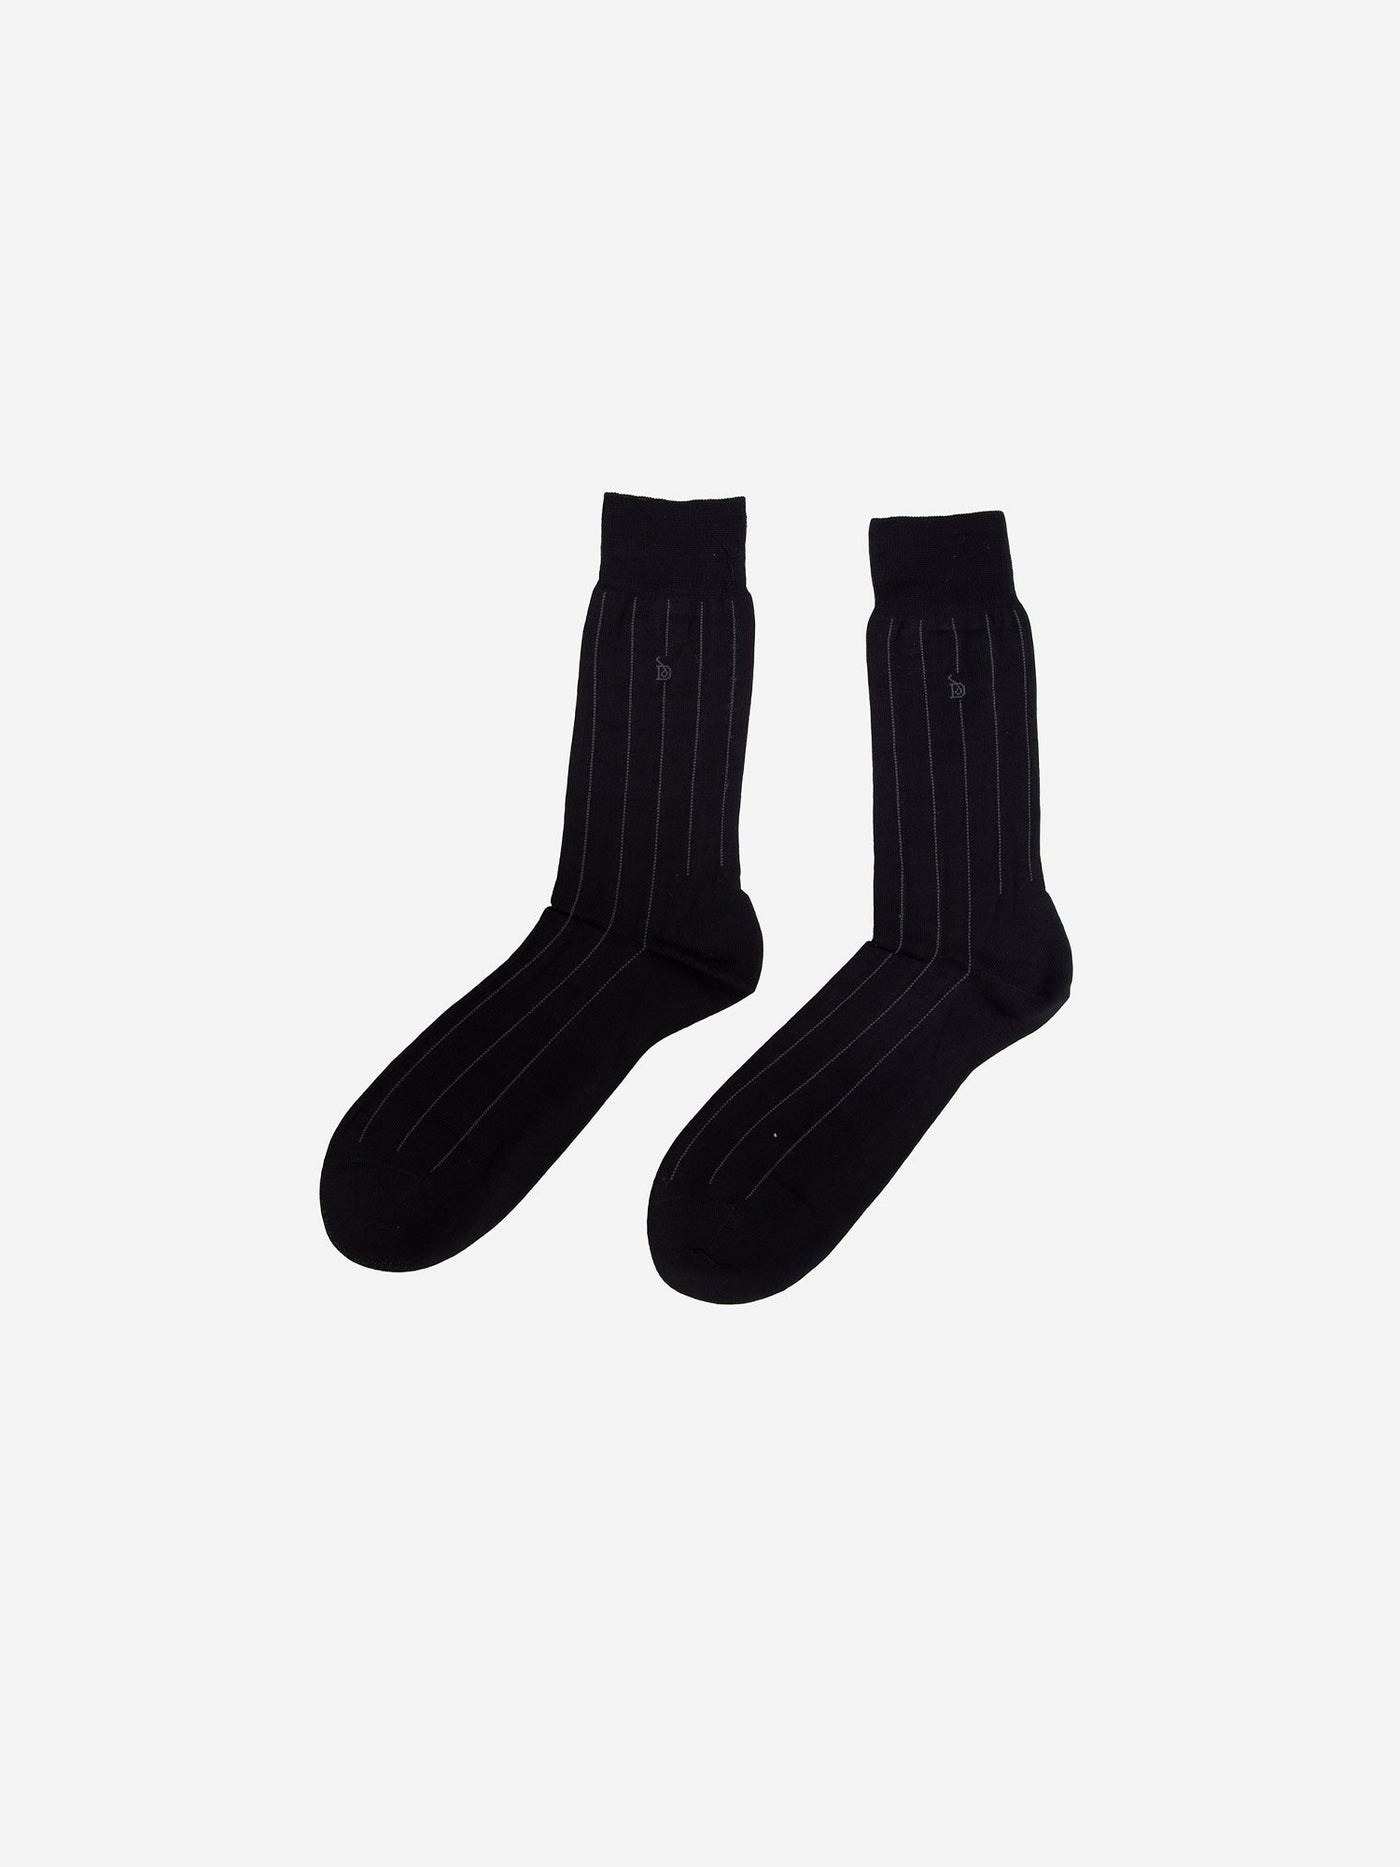 Dalydress Mens Vertically Striped Socks